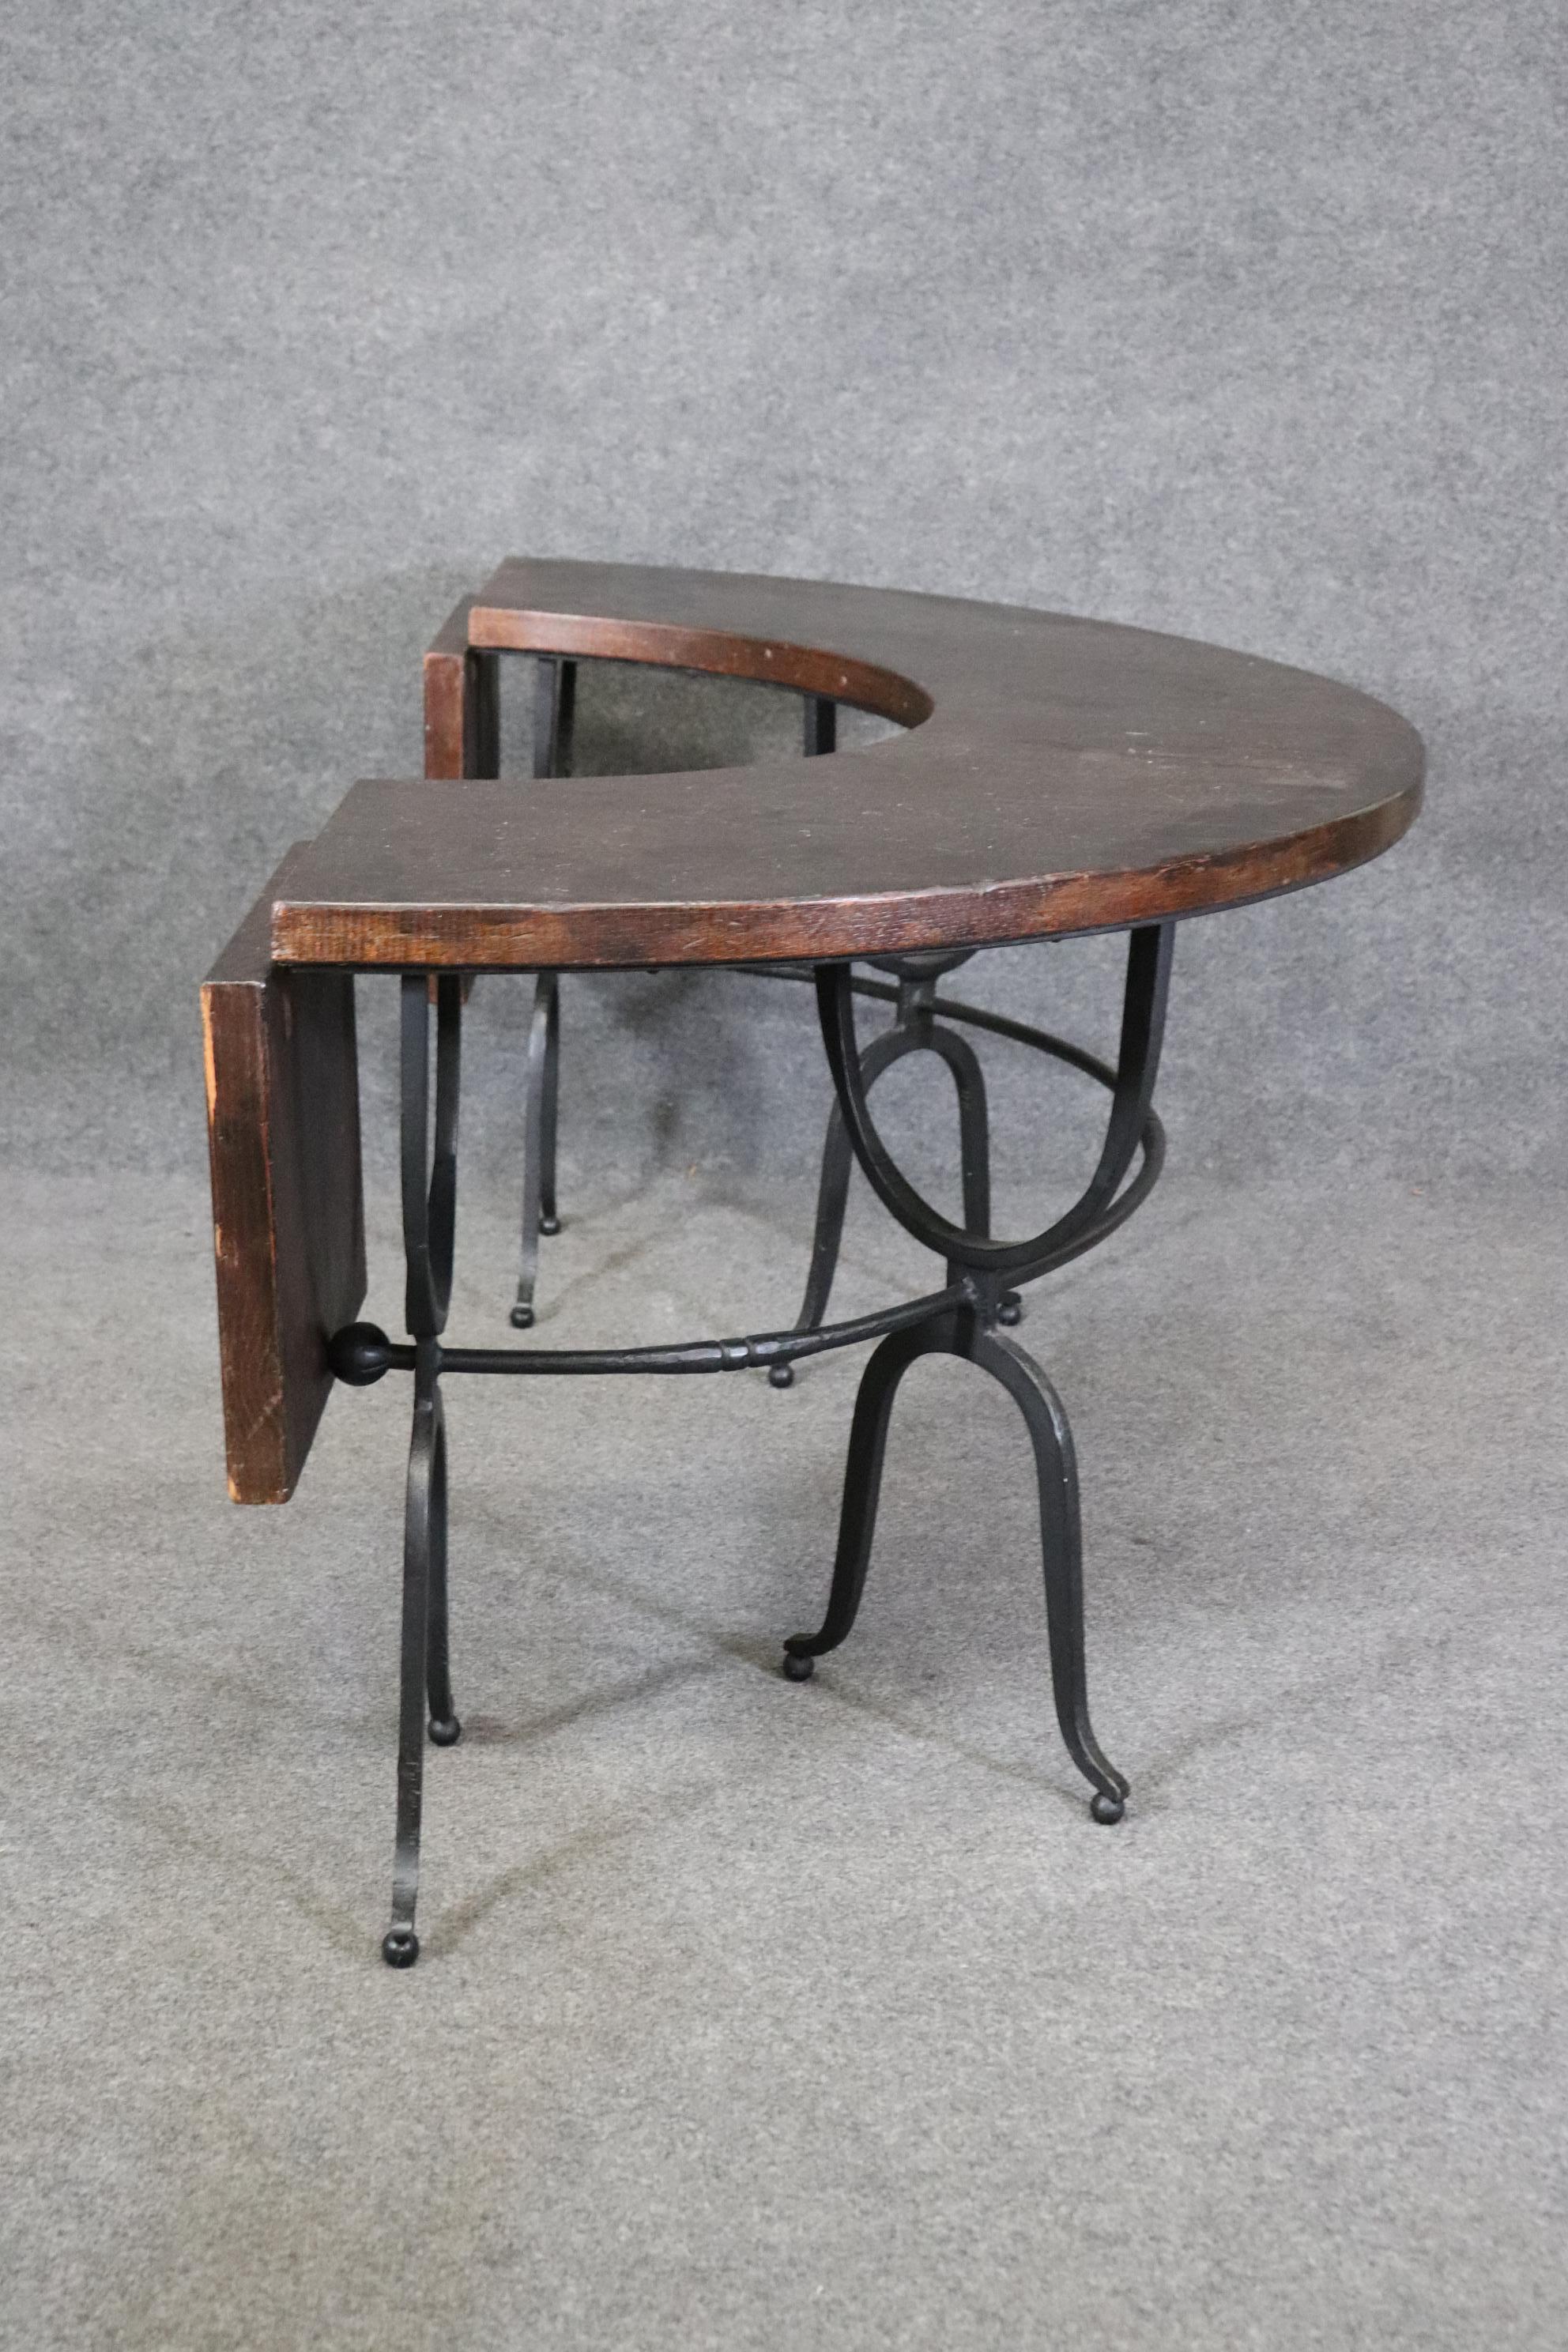 Early 20th Century Very Rare Parisian Made Hand-Wrought Iron Wine Tasting Table Bar Desk